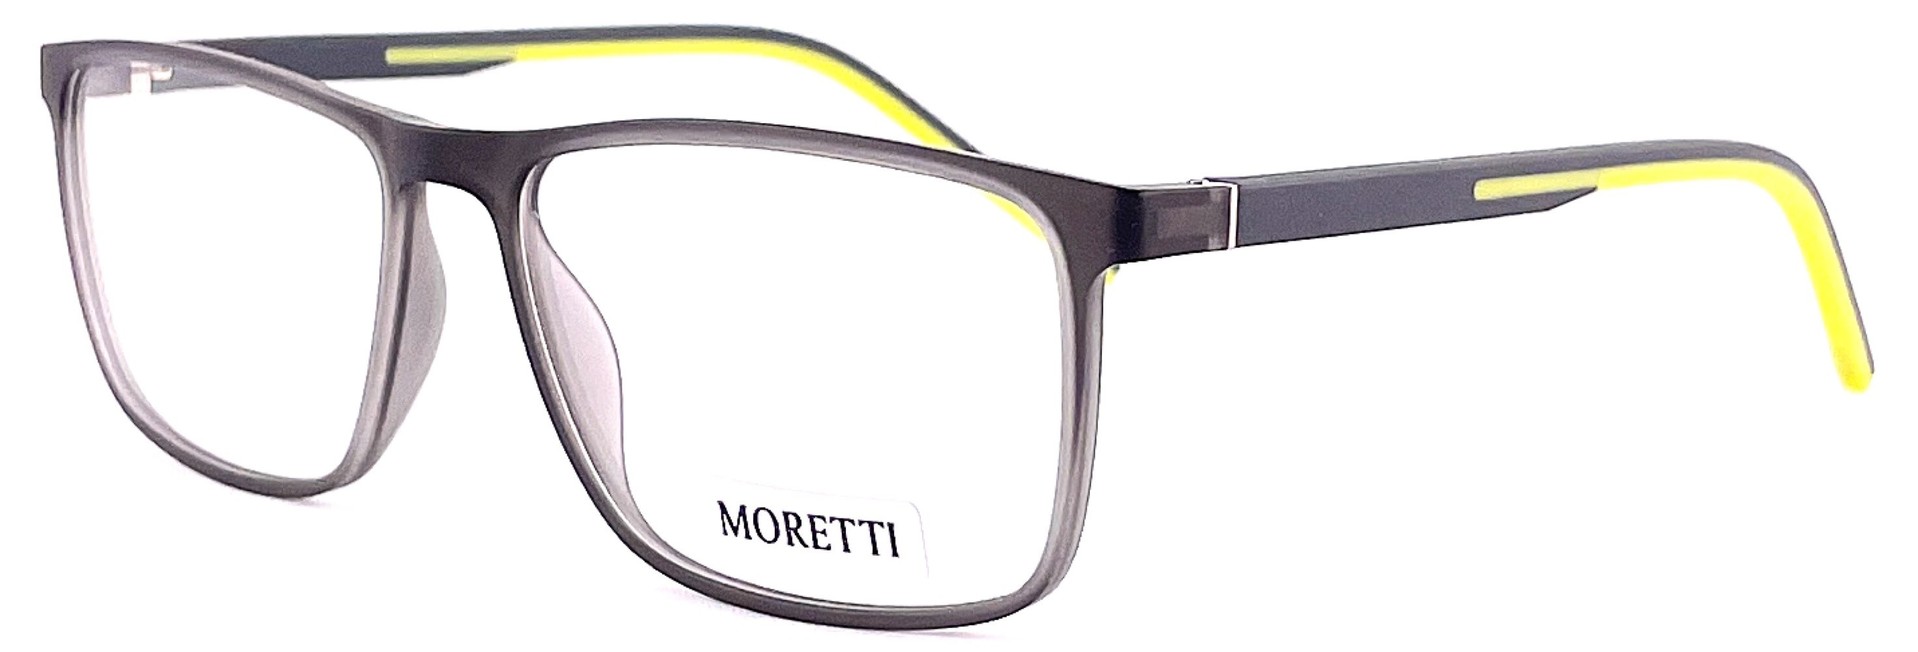 Moretti MZ10-19 C.02R 2